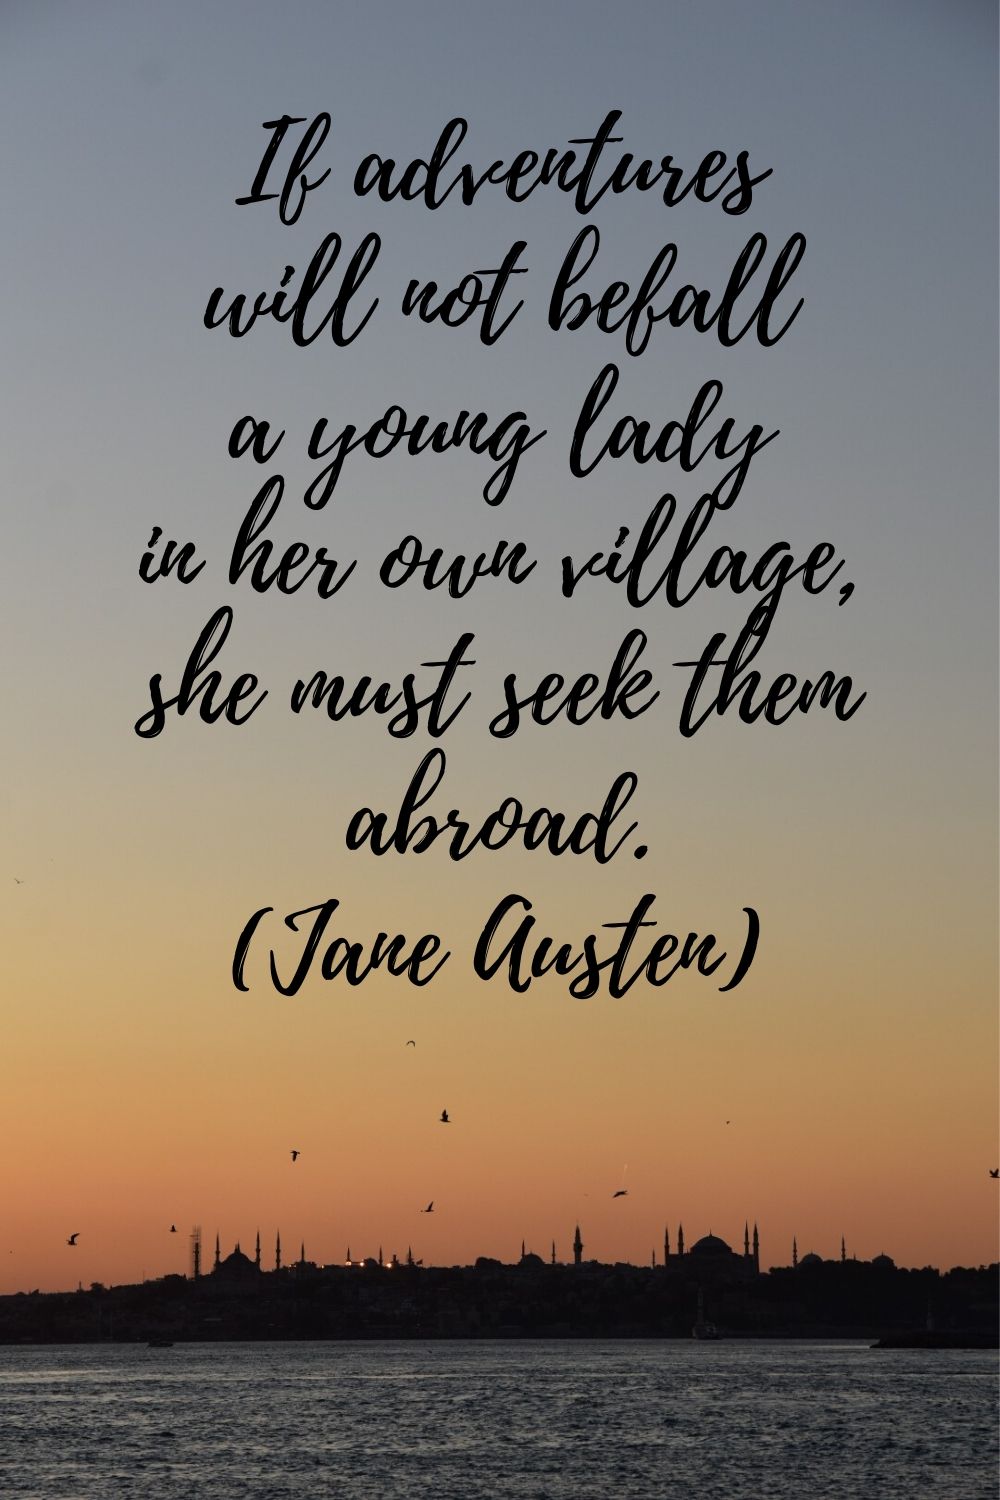 Jane Austen quotes about travel